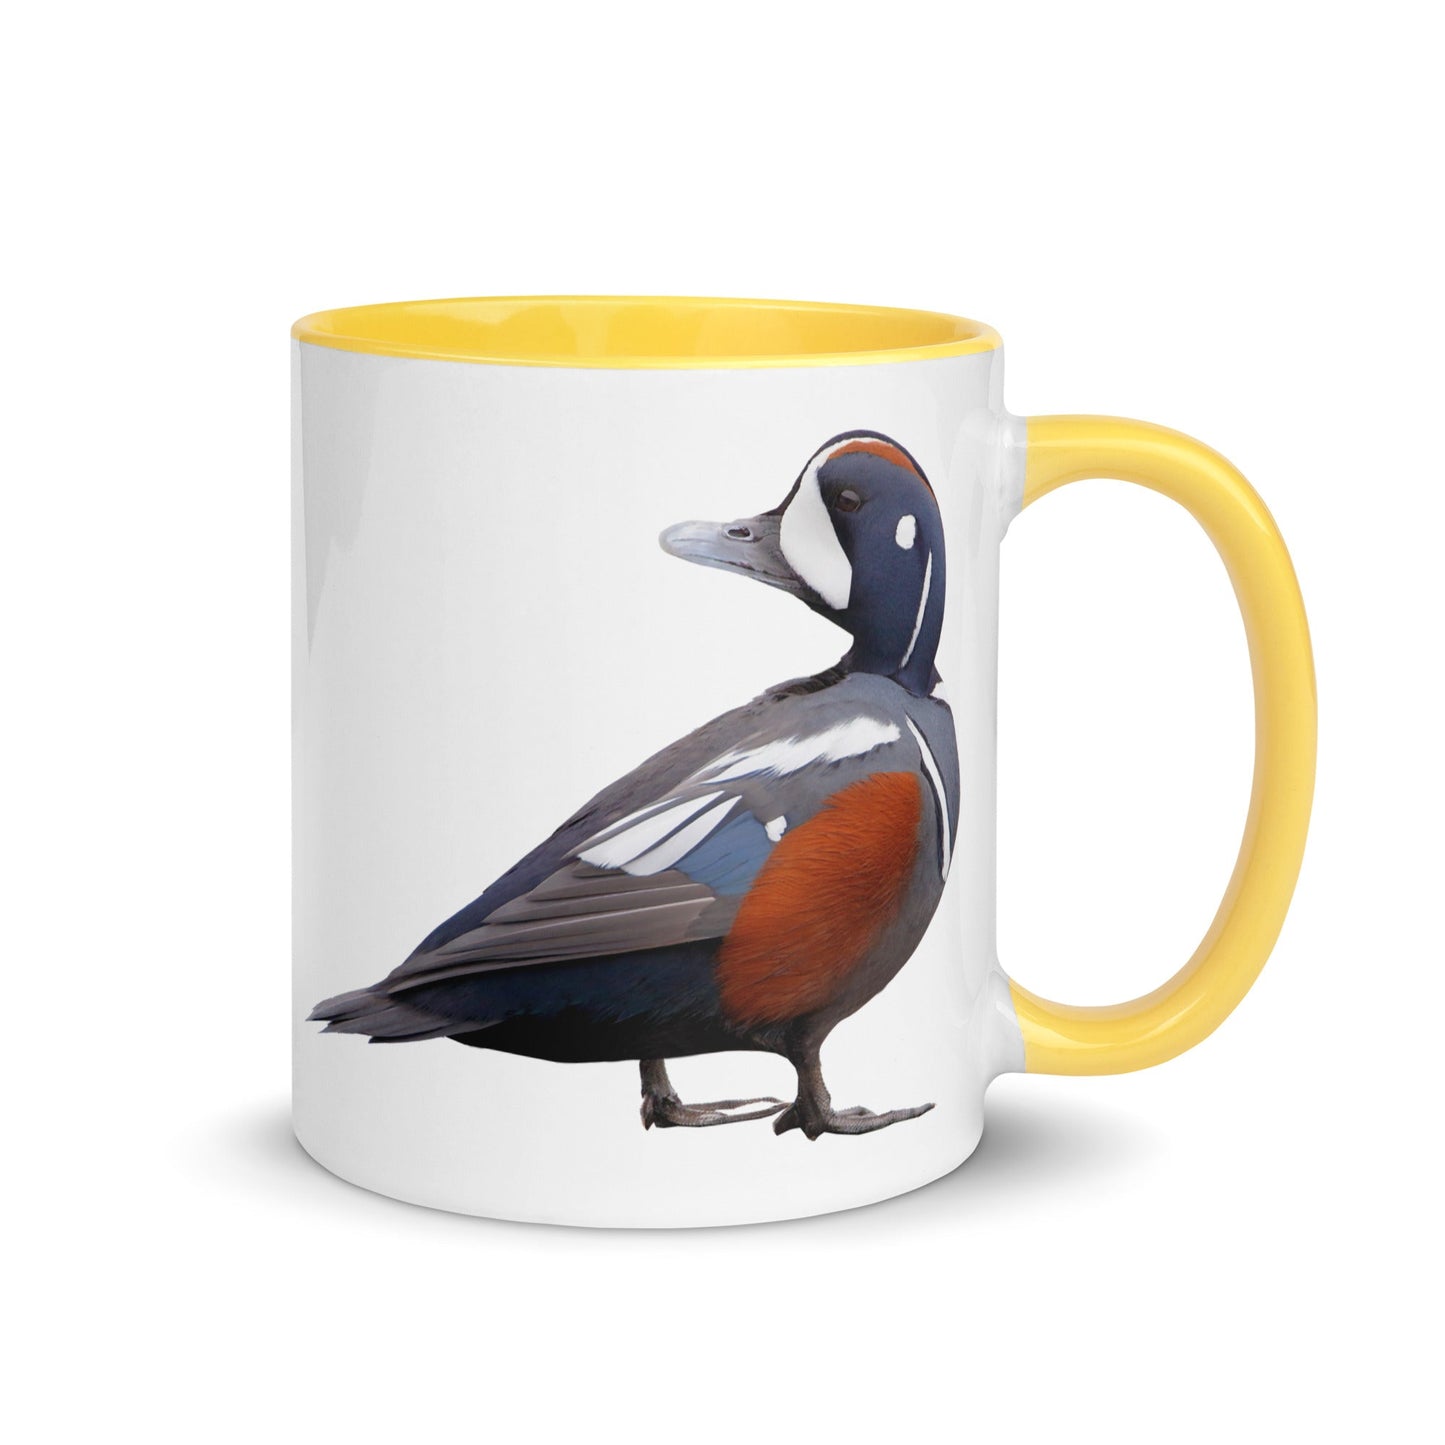 Harlequin Ducks Ceramic Mug with Color Inside